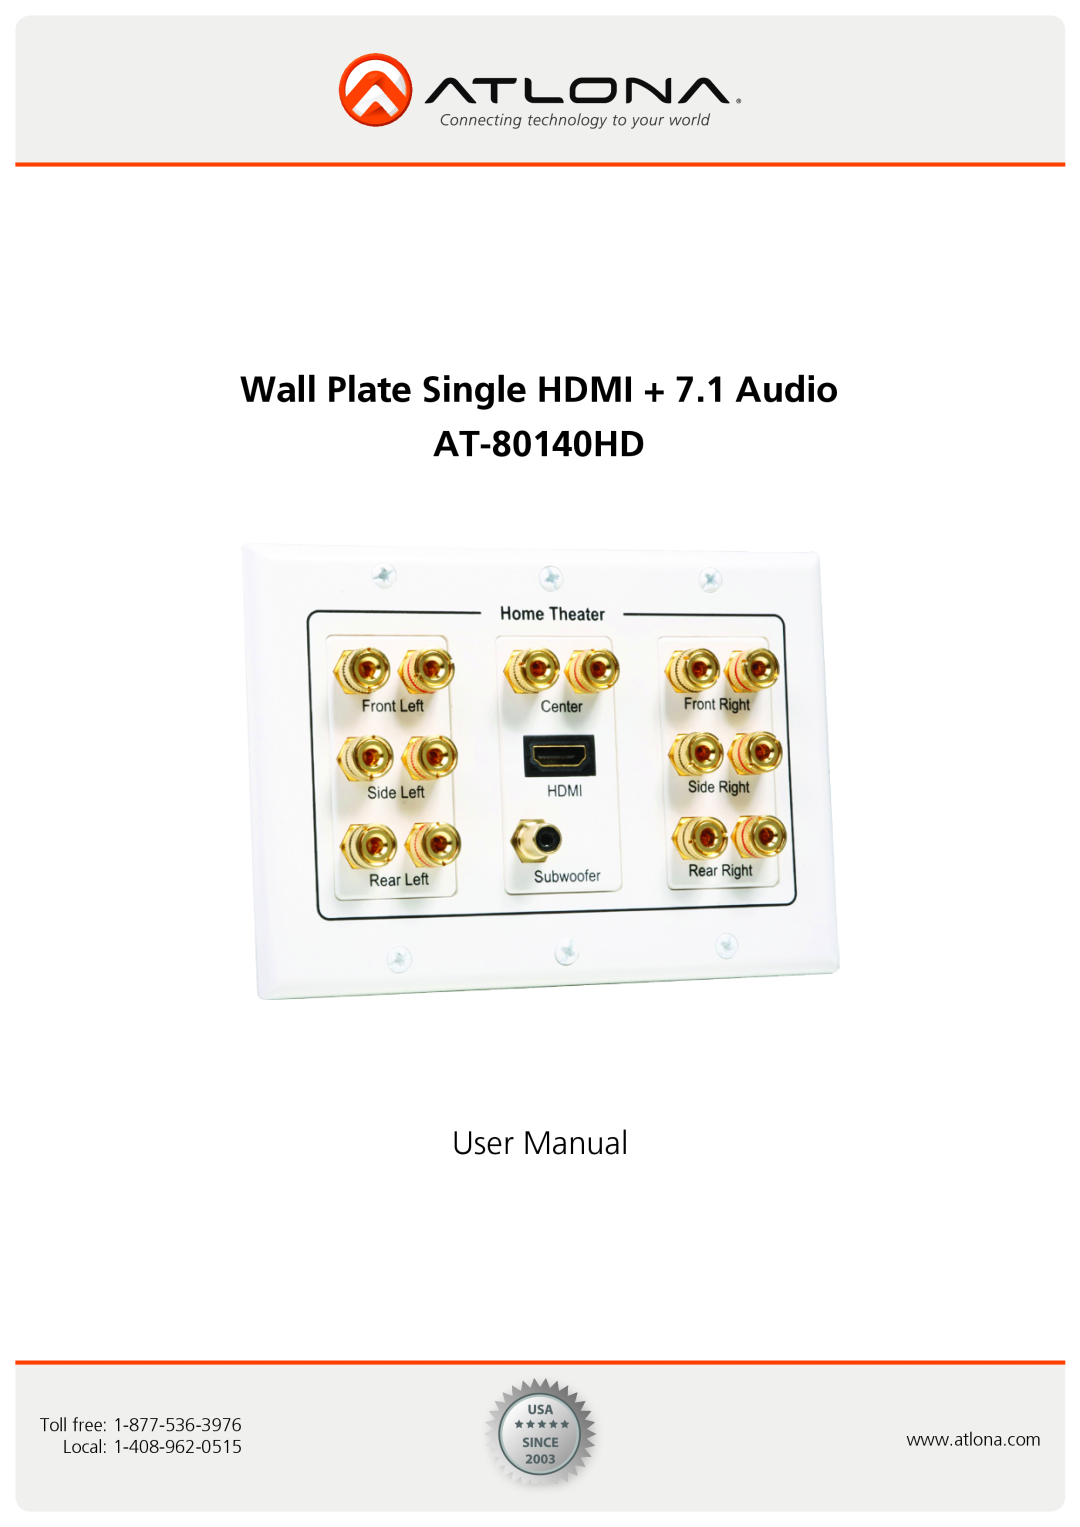 Atlona user manual Wall Plate Single HDMI + 7.1 Audio AT-80140HD, User Manual, Toll free, Local 